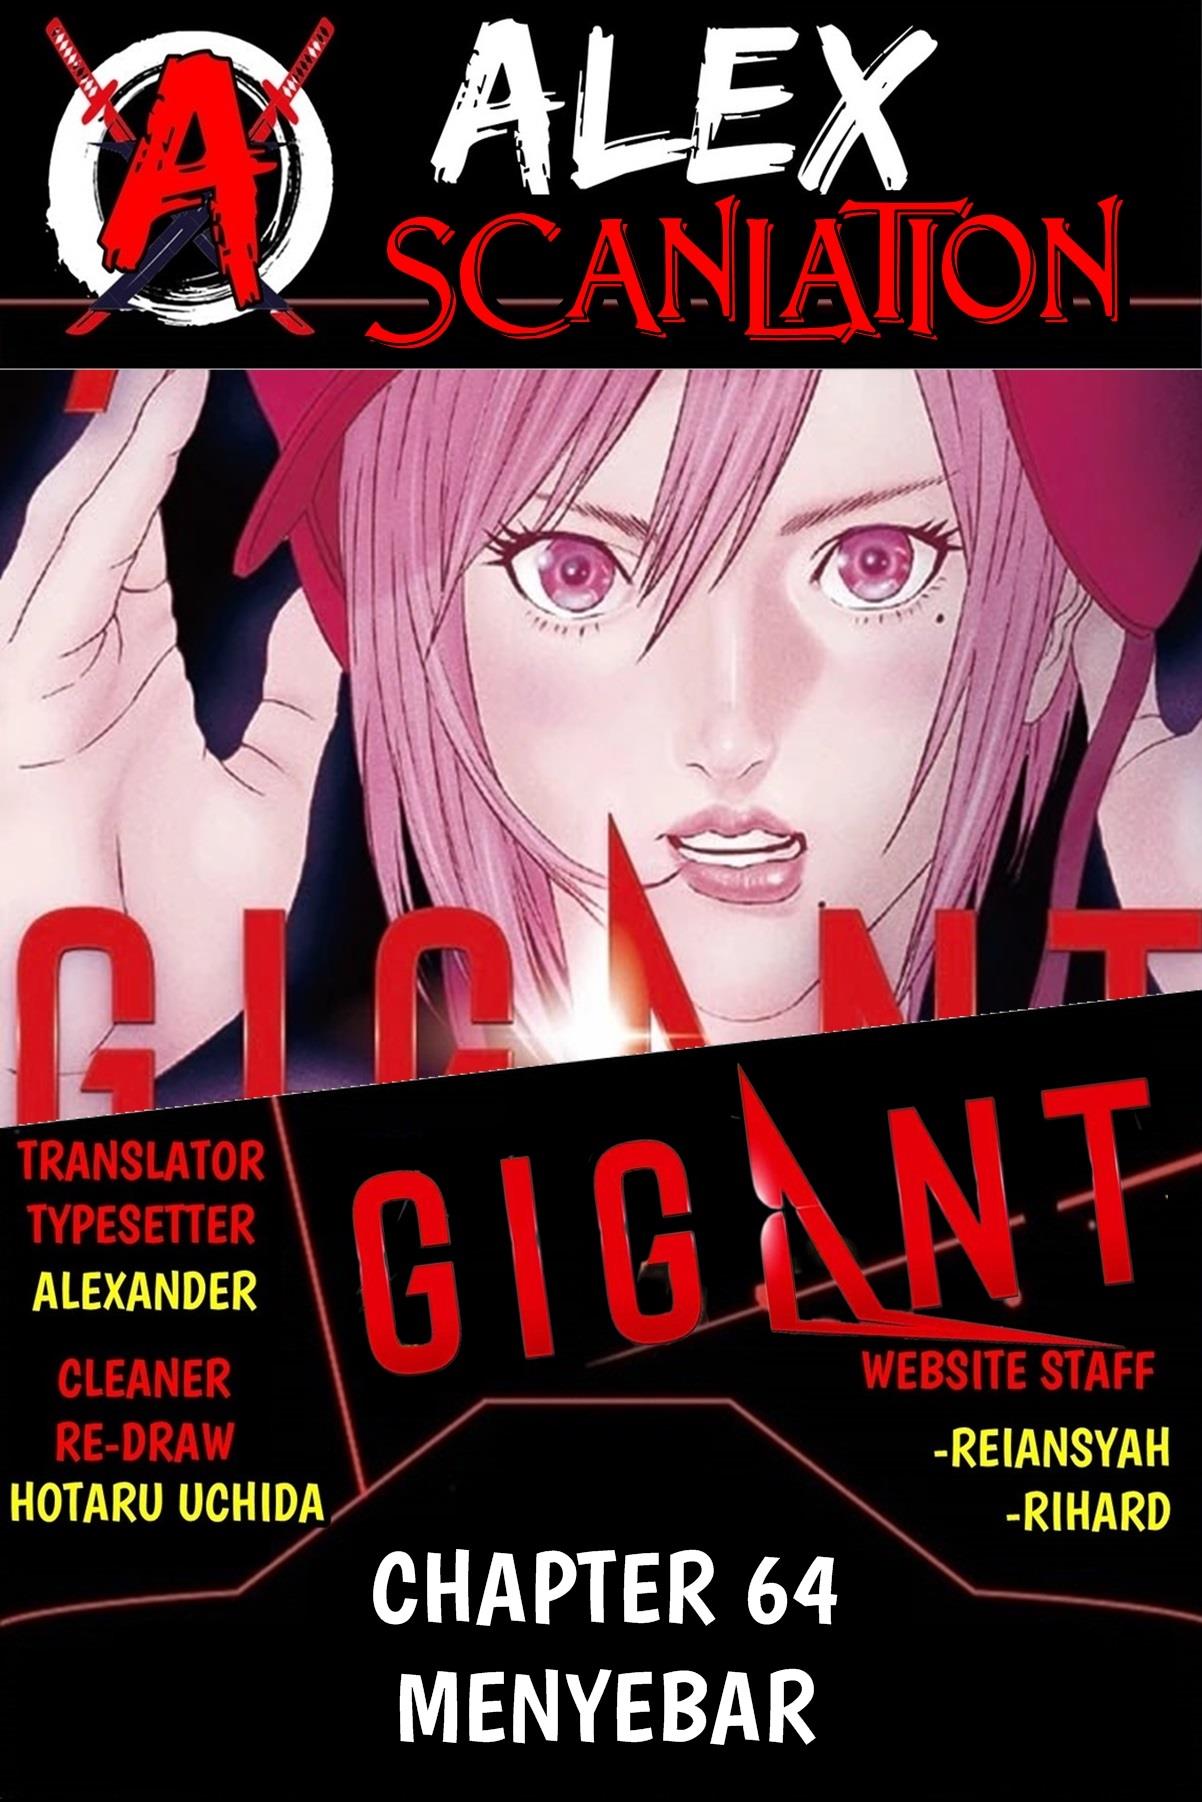 GIGANT Chapter 64